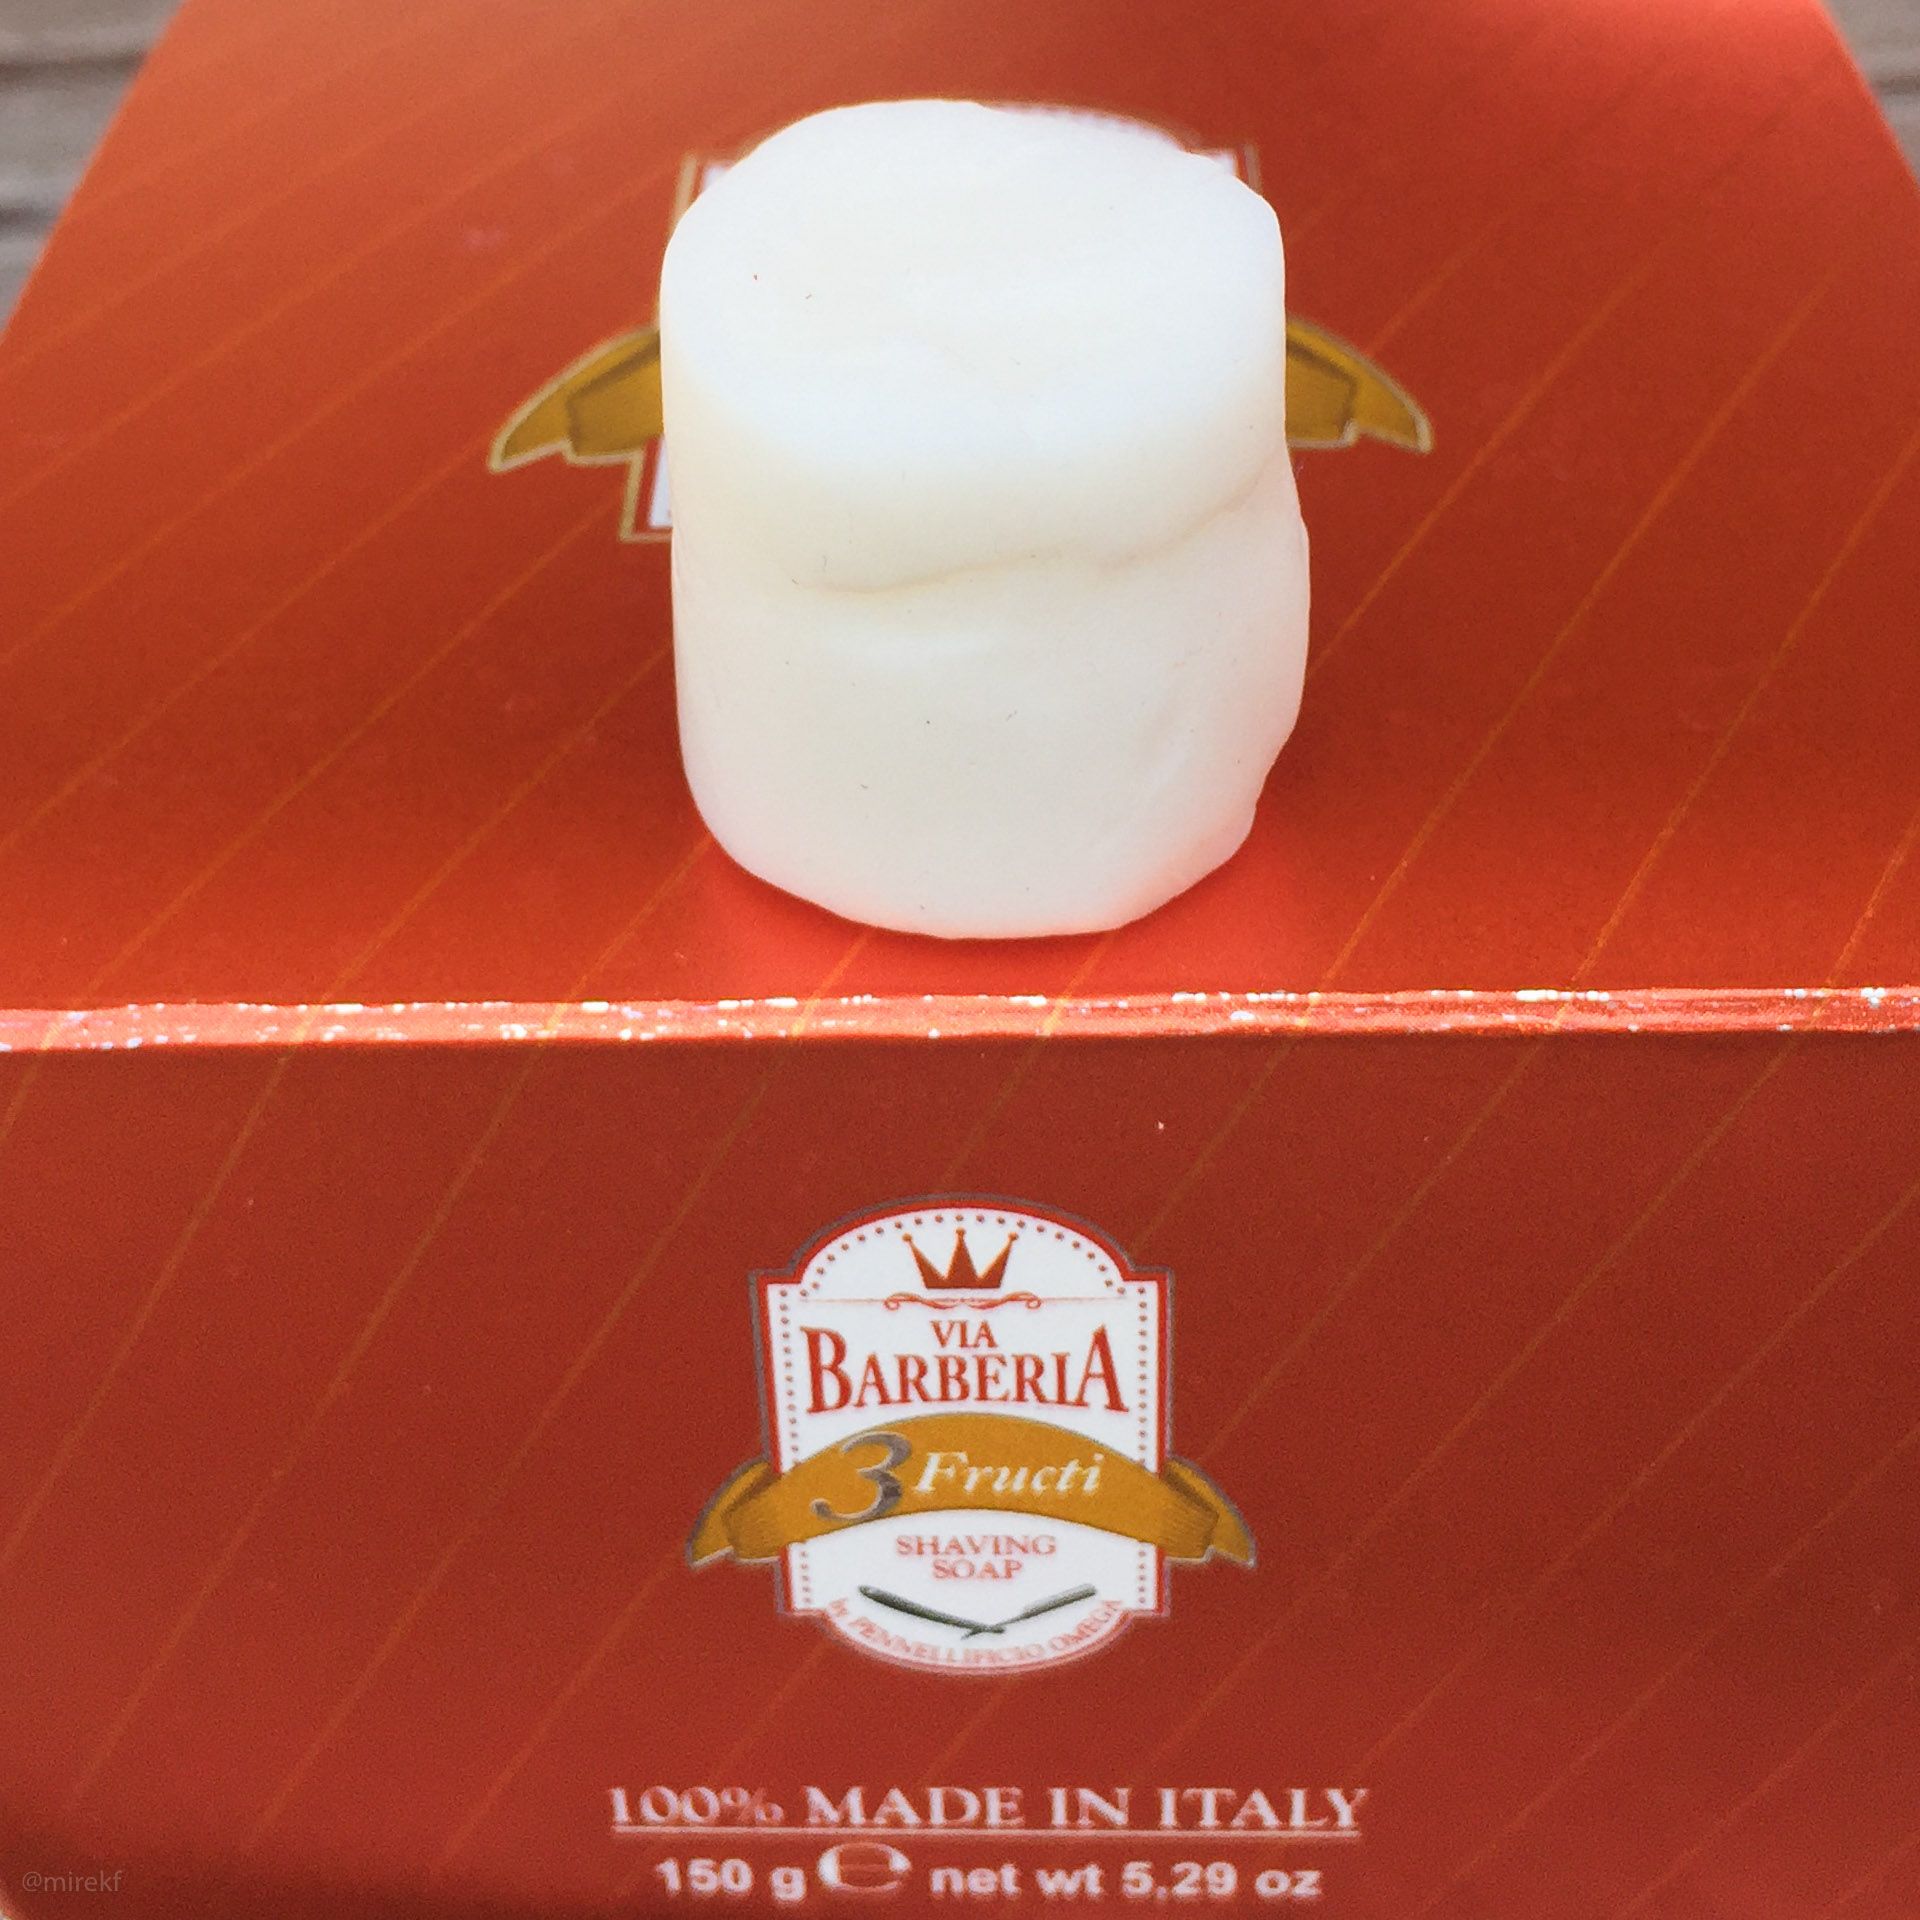 Sztyft uformowany z mydła do golenia Via Barberia Fructi Shaving Cream